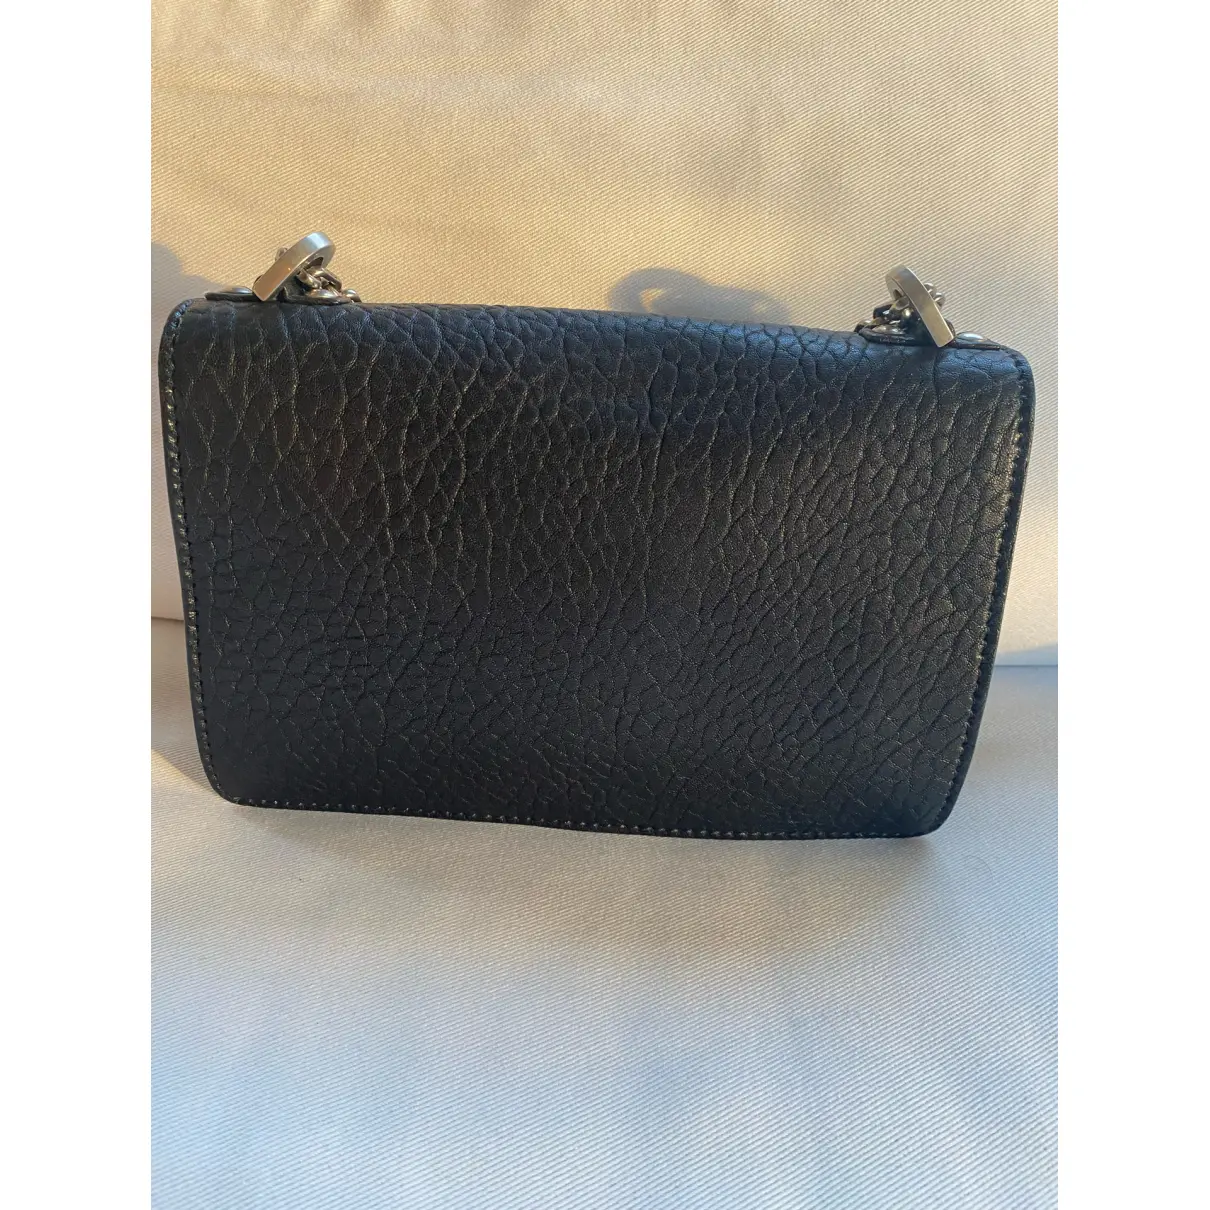 Buy Dior J'adior leather handbag online